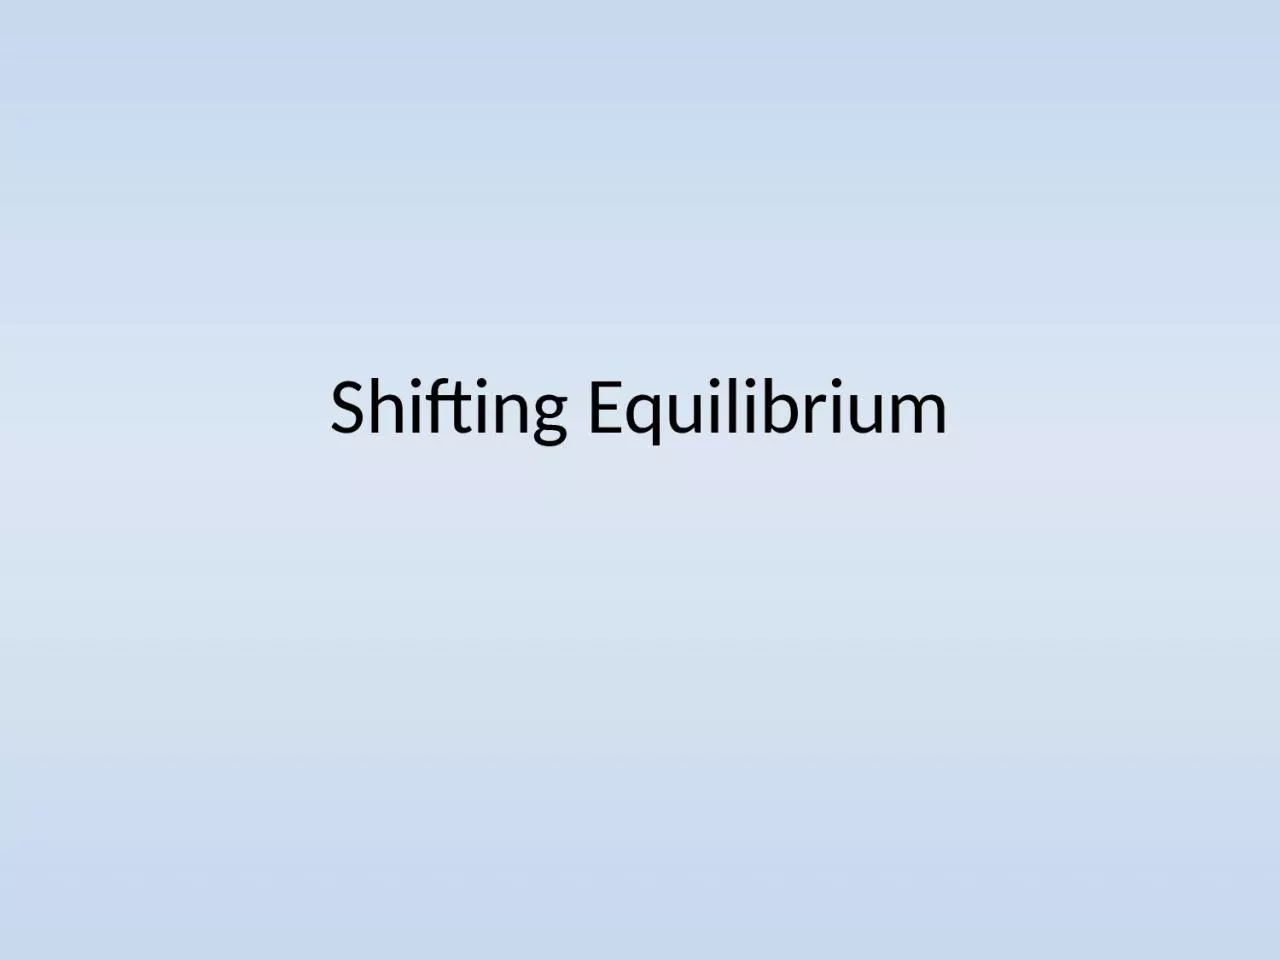 Shifting Equilibrium Applications Involving the Equilibrium Constant